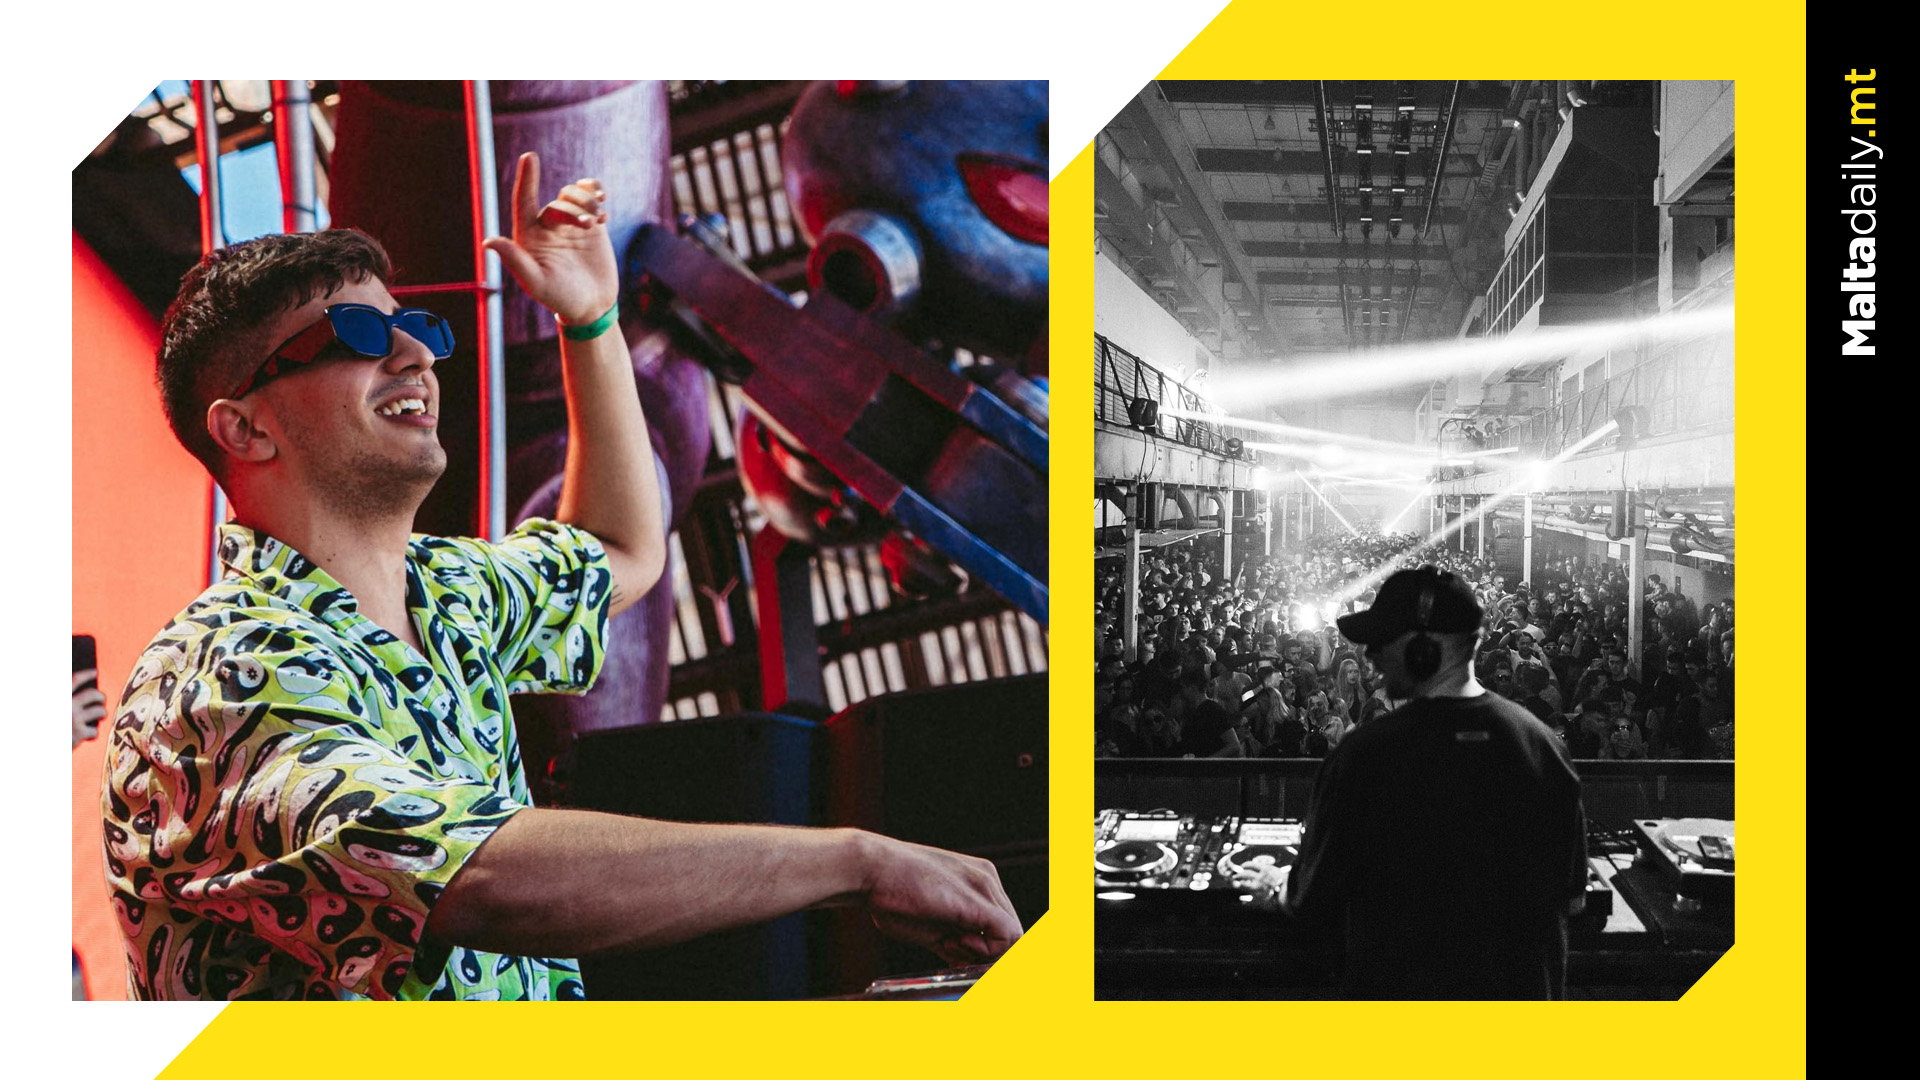 Maltese DJ Edd to perform at legendary London superclub Printworks